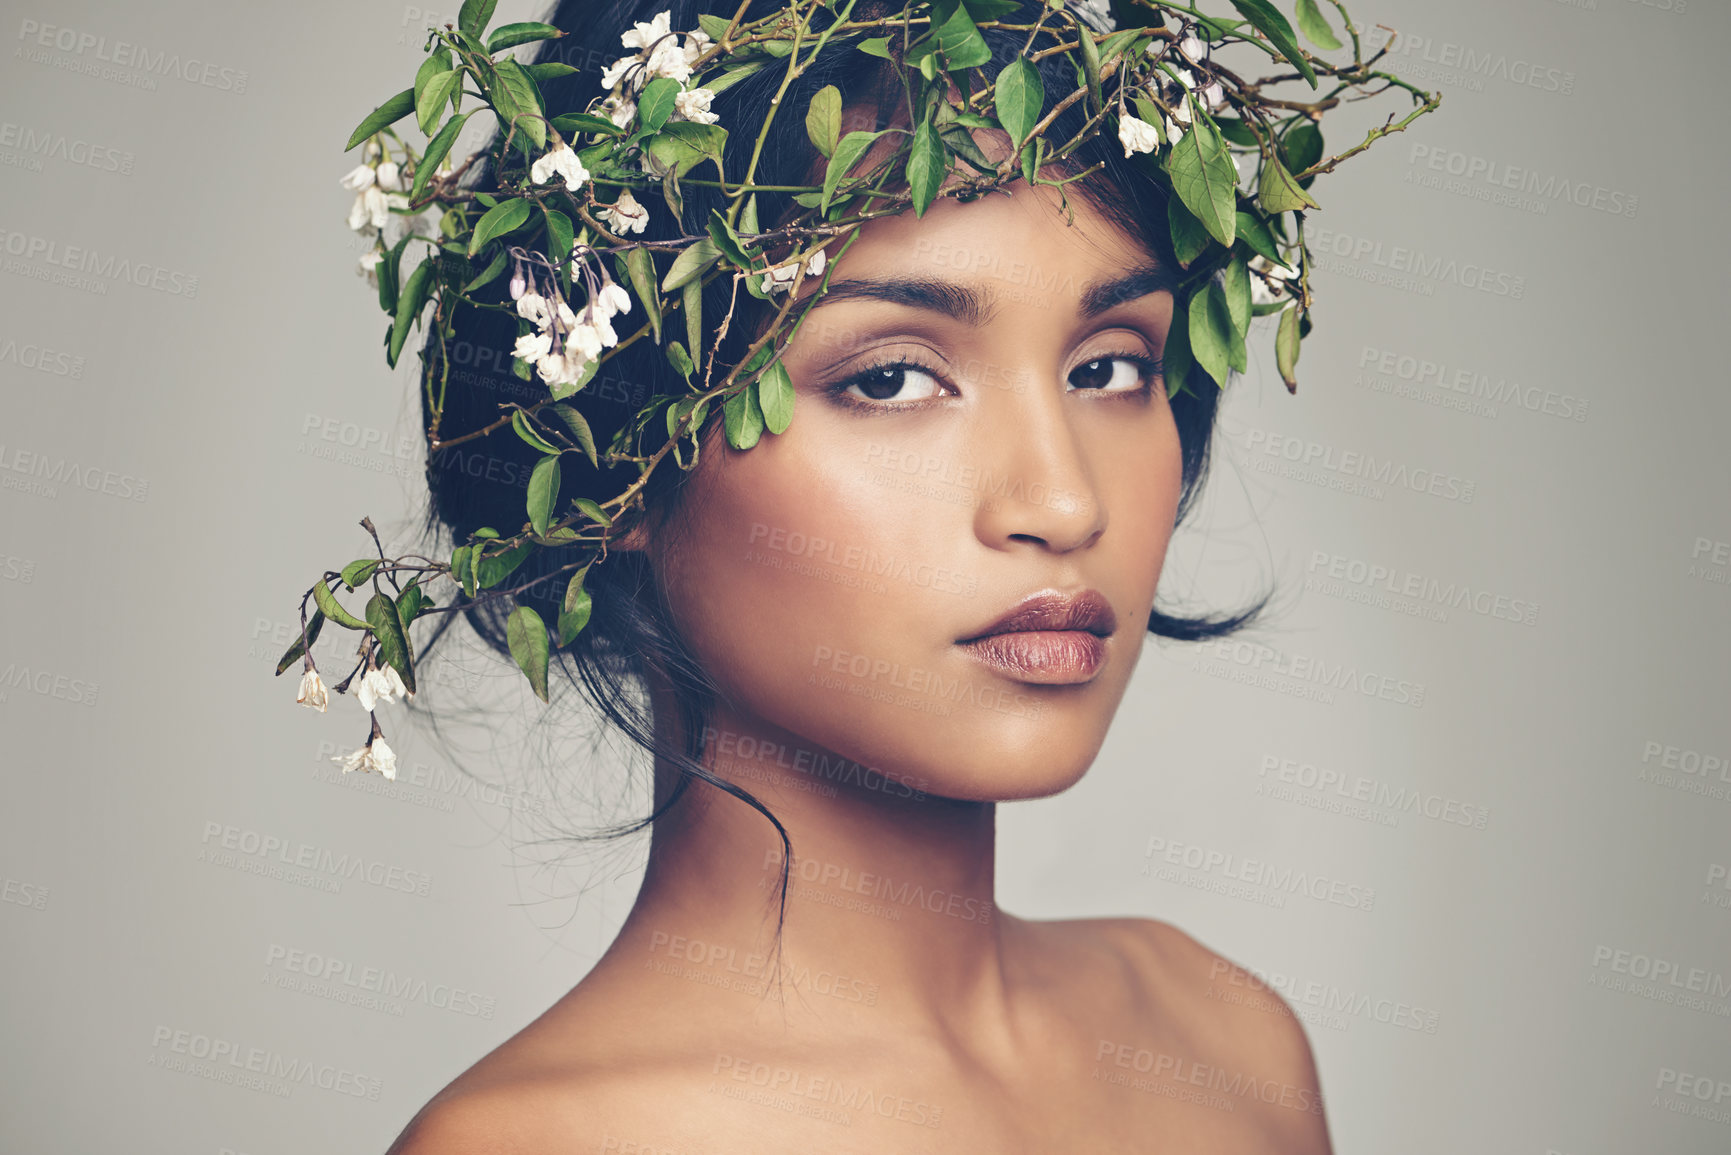 Buy stock photo Studio portrait of a beautiful young woman wearing a head wreath